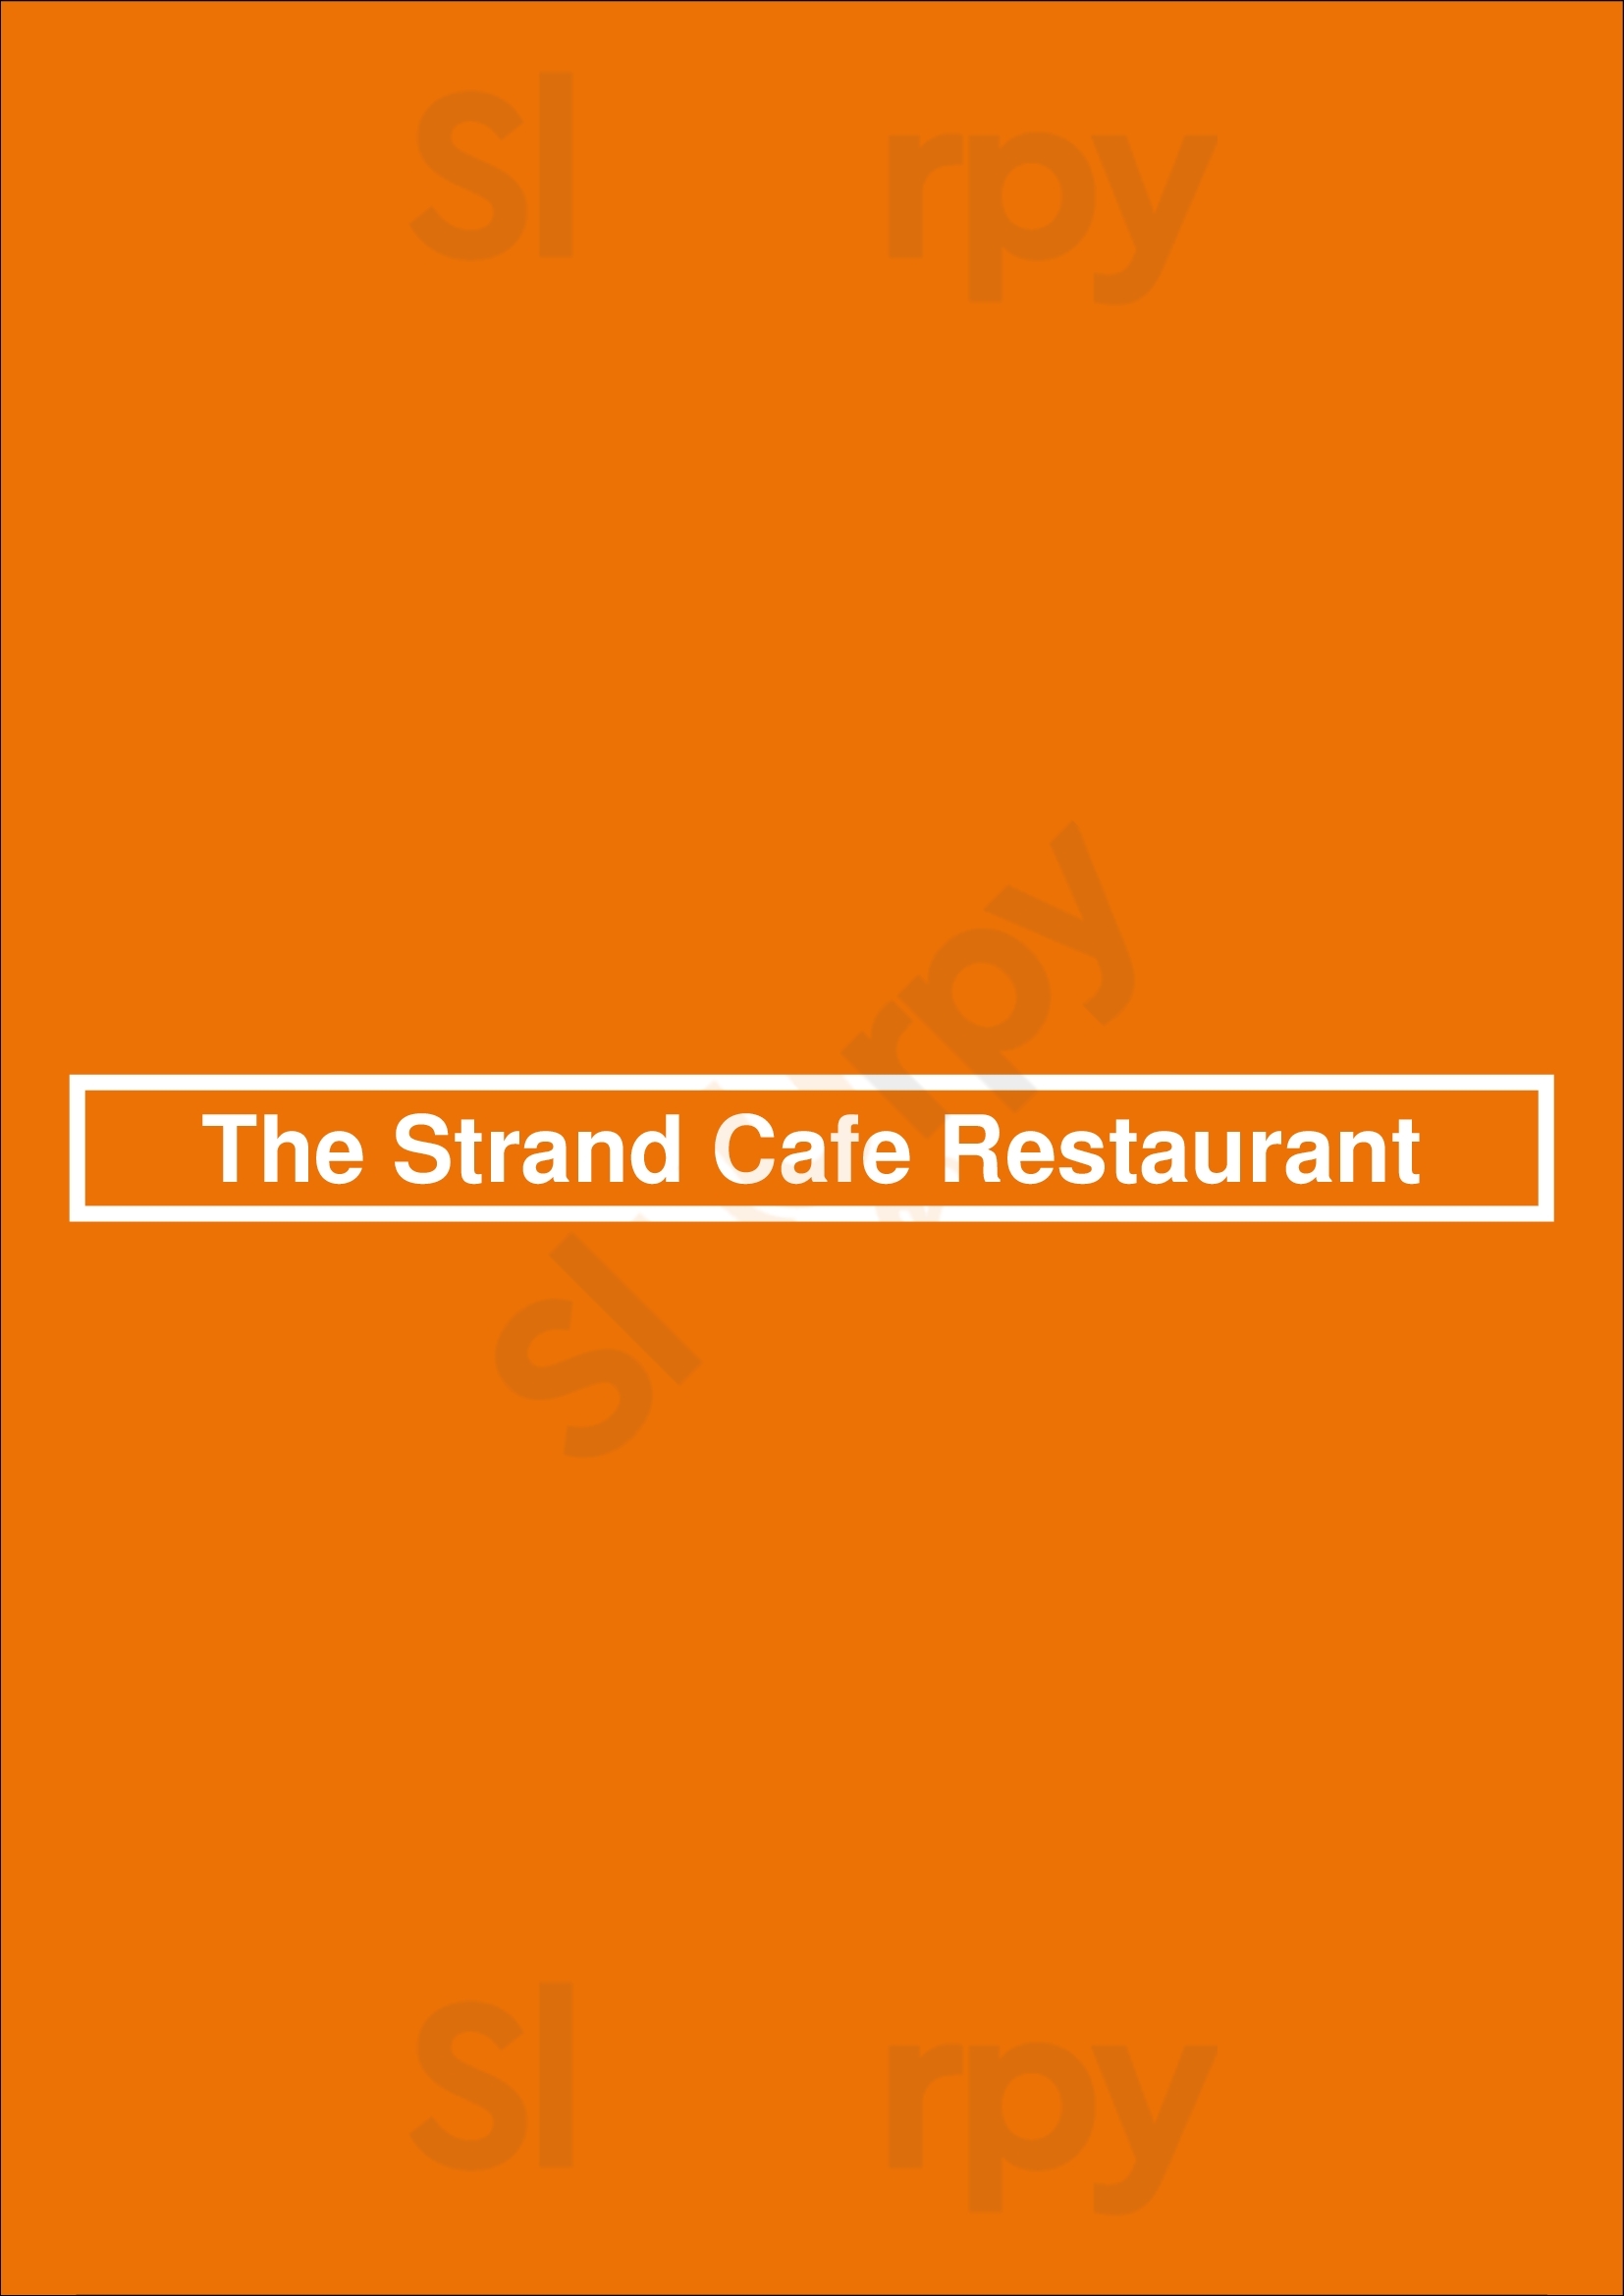 The Strand Cafe Restaurant Glenelg Menu - 1